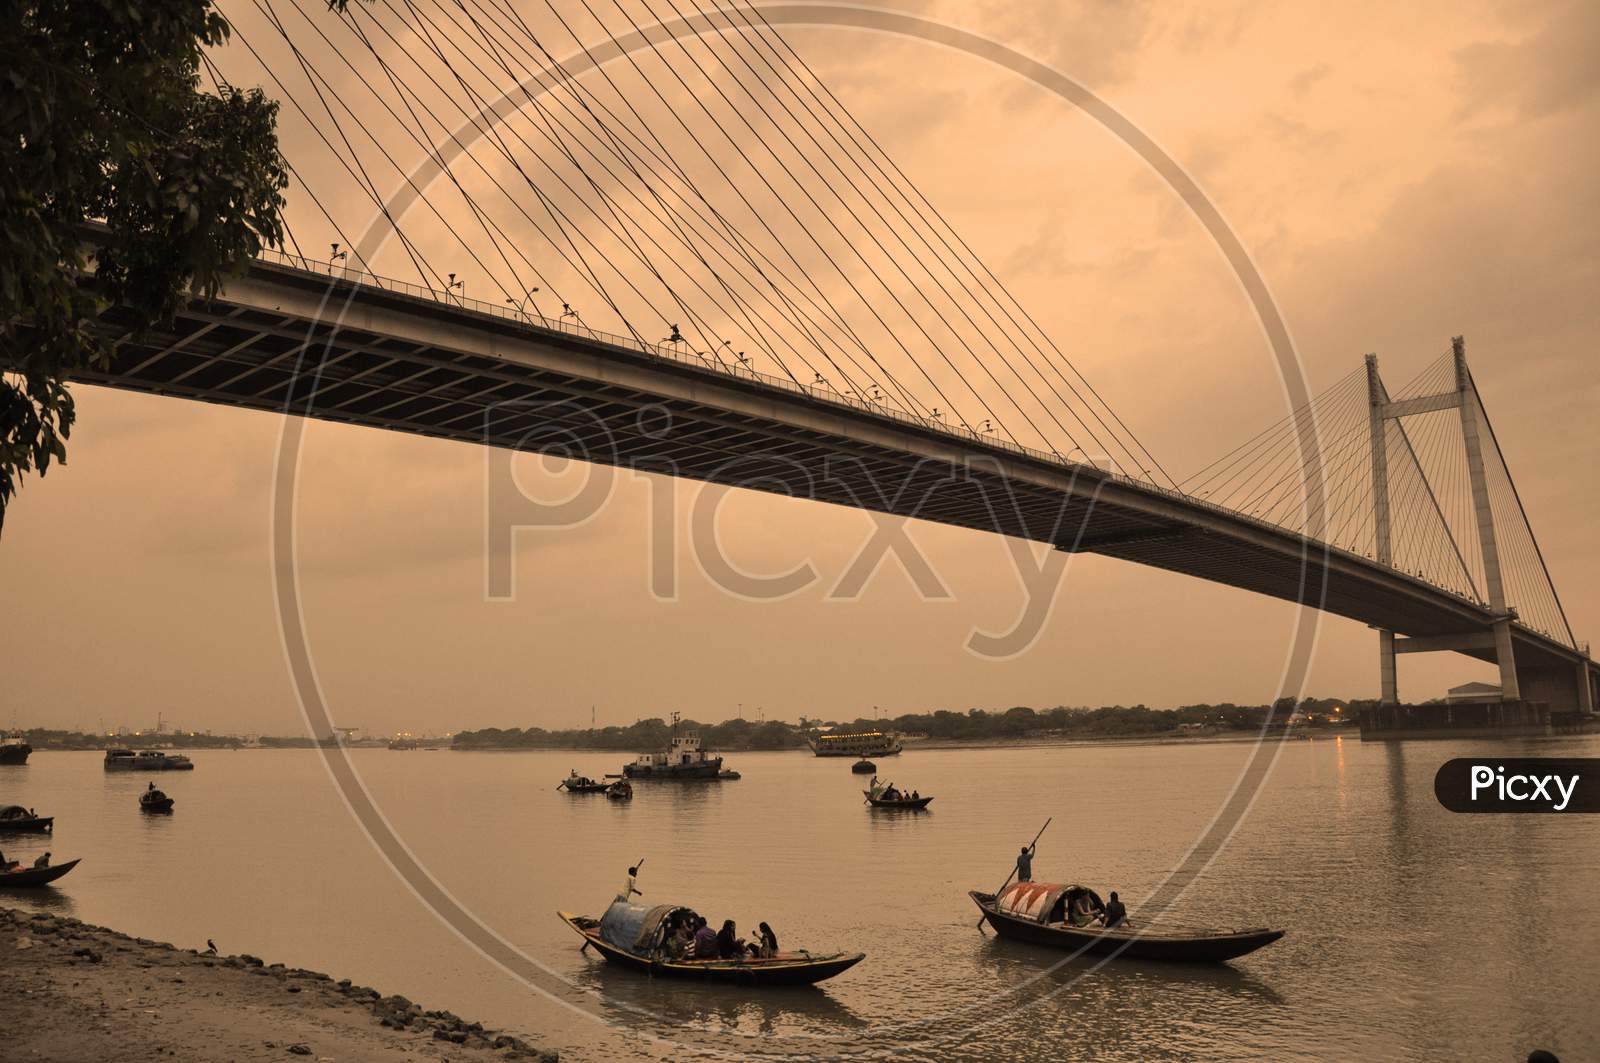 Ganga River Kolkata west Bengal